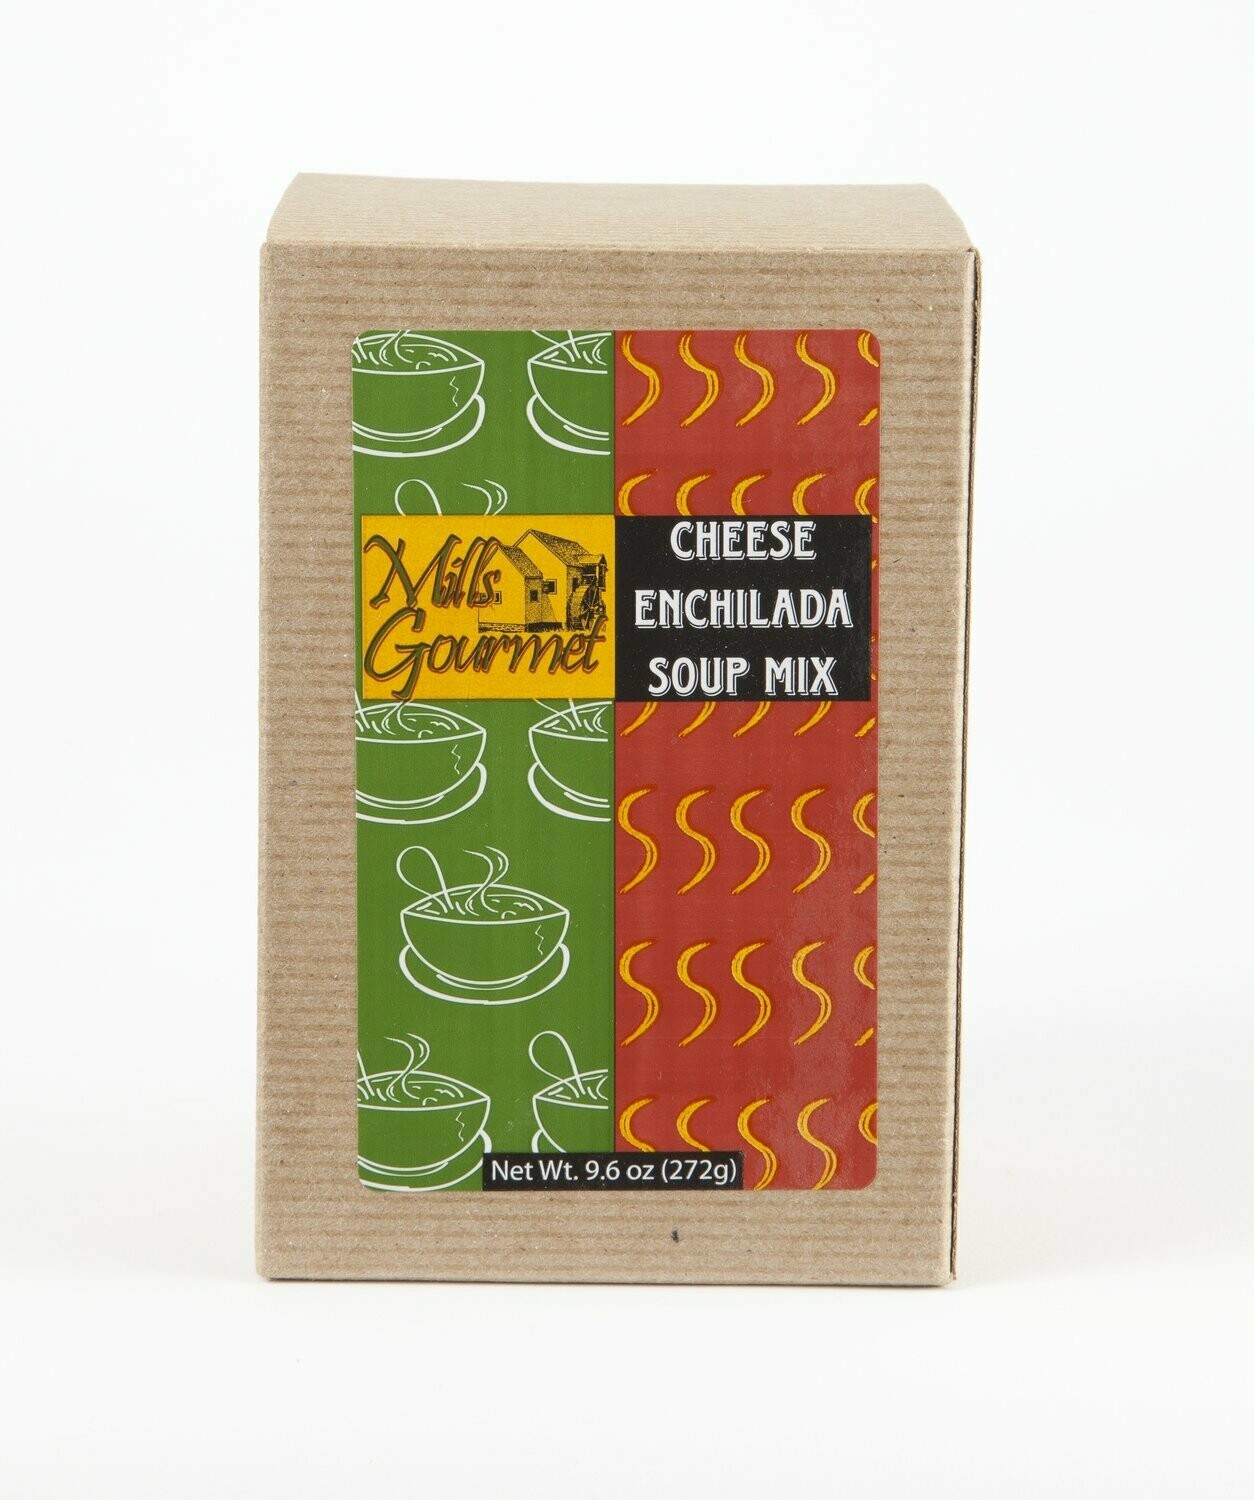 Mills Gourmet Cheese Enchilada Soup Mix